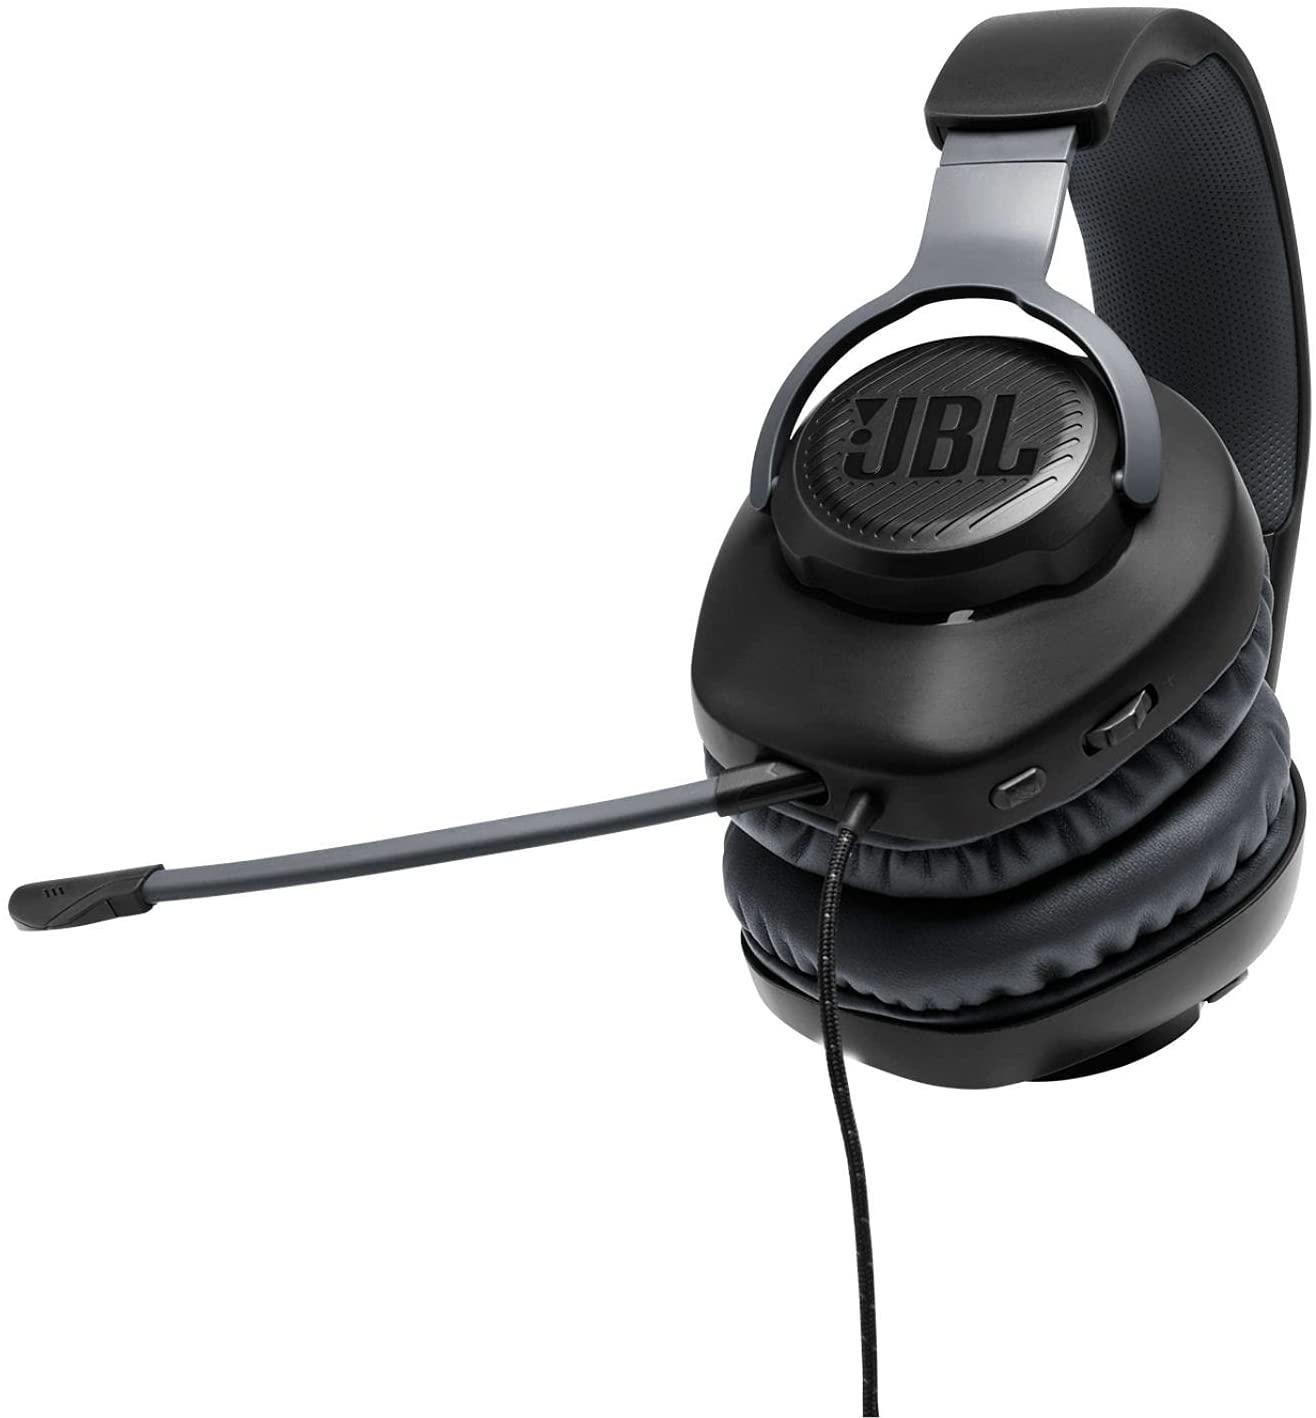 JBL Quantum 100 (Black) - Wired Over-Ear Gaming Headphones - GameStore.mt | Powered by Flutisat